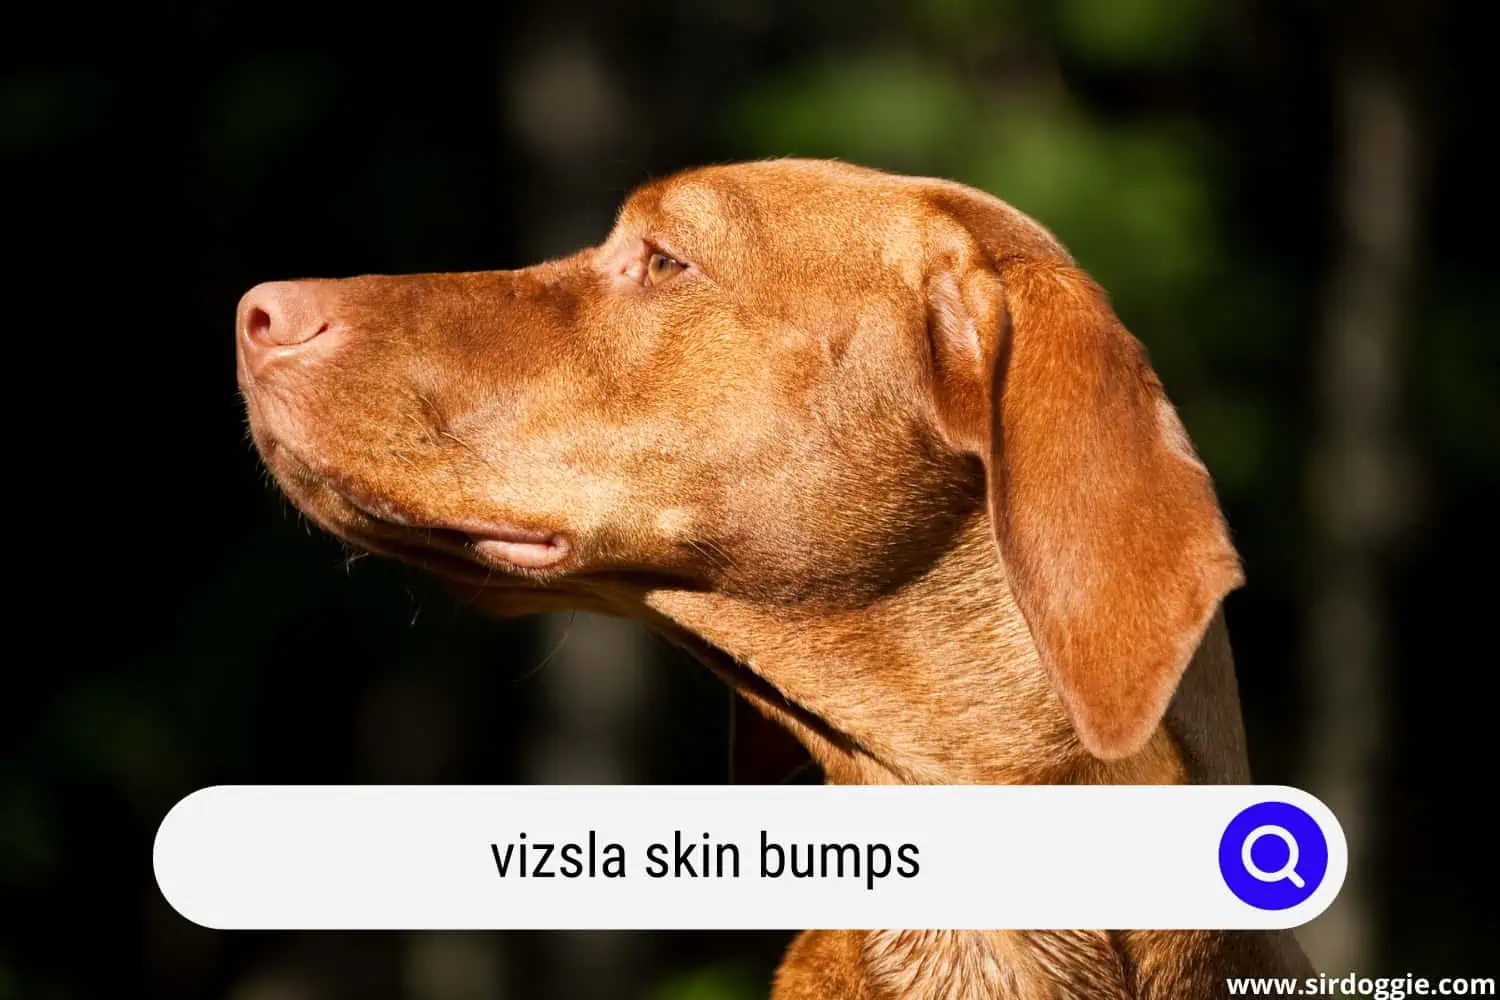 Vizsla dog with skin bumps